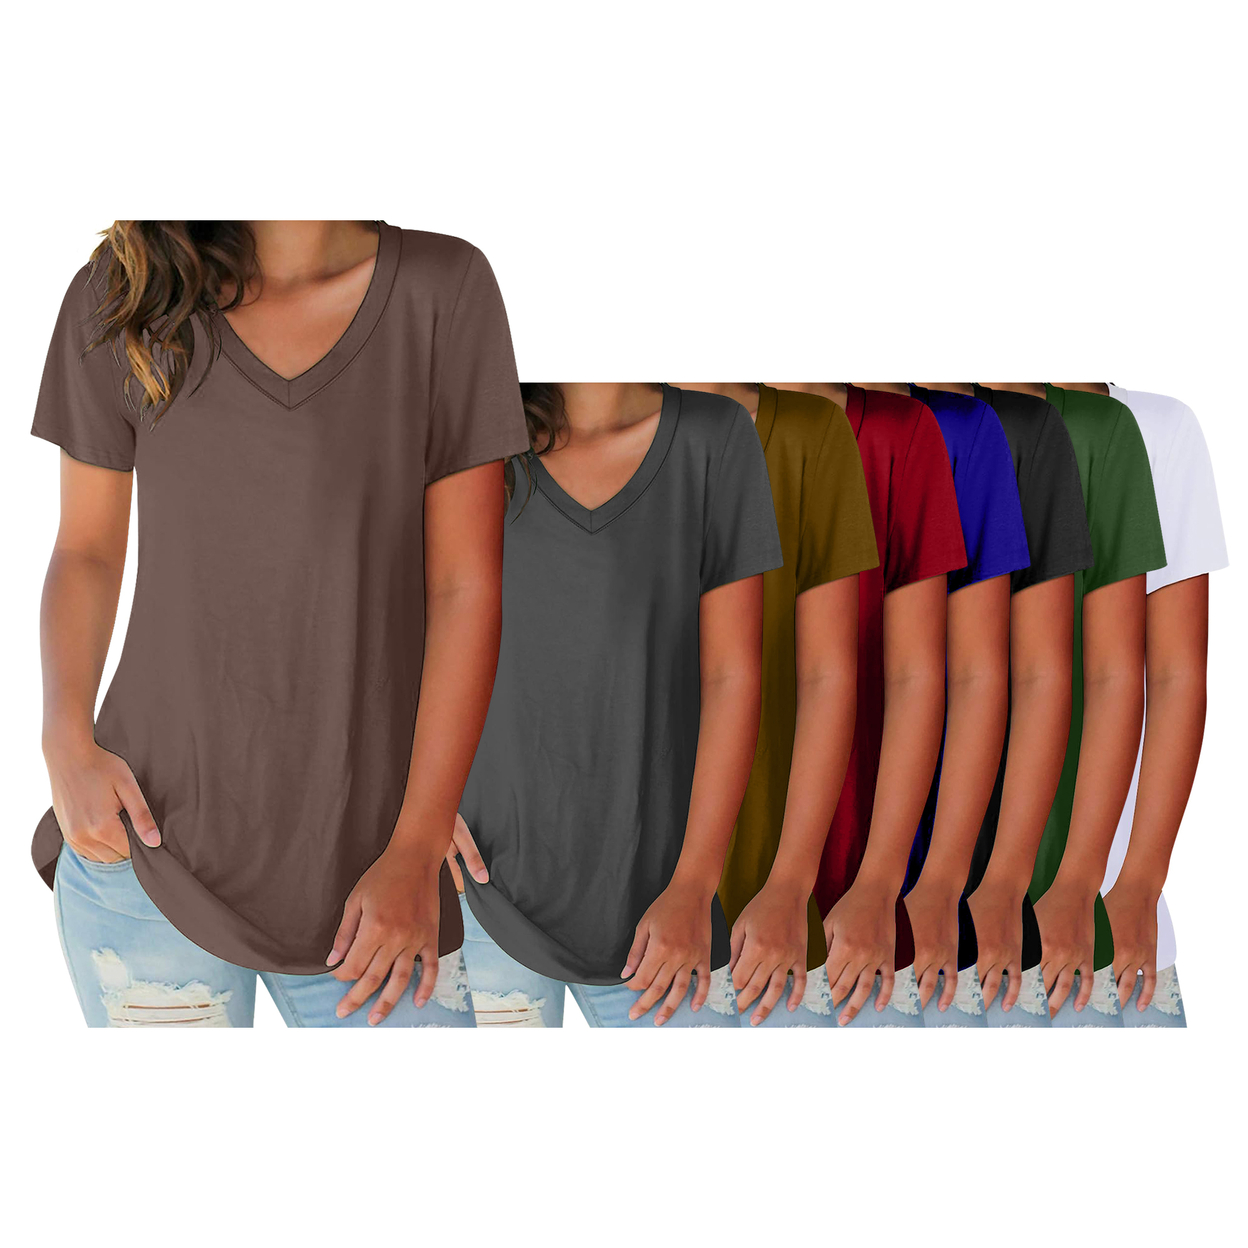 3-Pack: Women's Ultra Soft Smooth Cotton Blend Basic V-Neck Short Sleeve Shirts - Black, Grey, Green, Xx-large